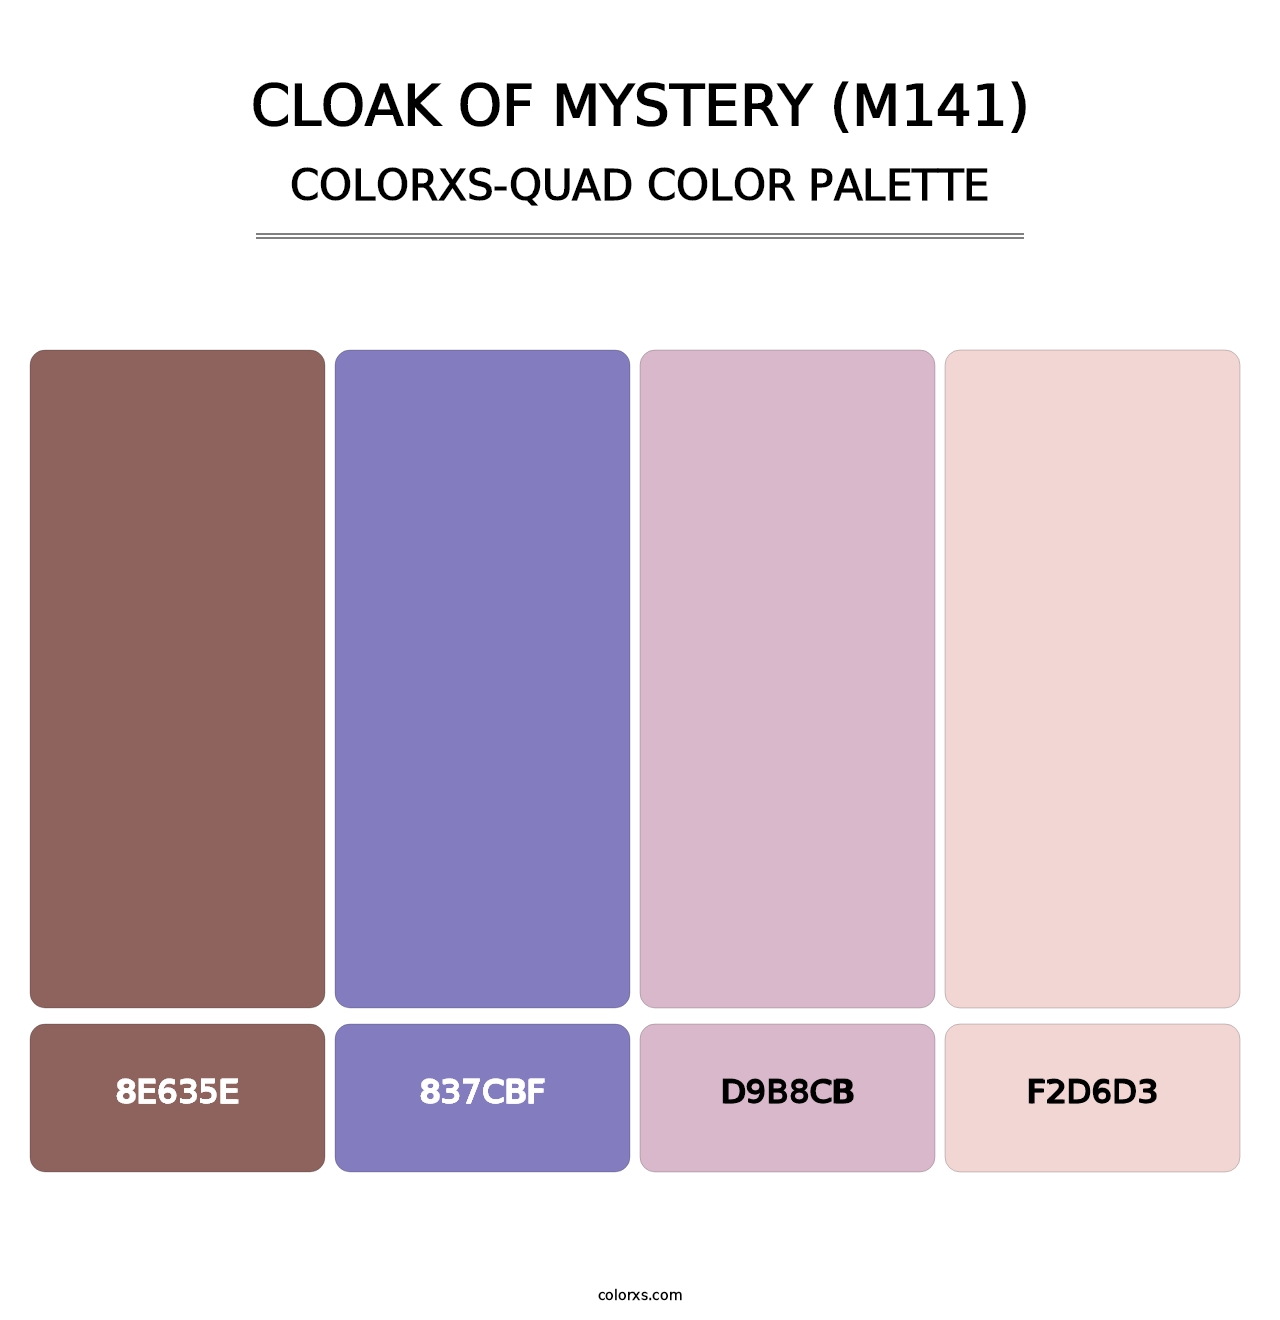 Cloak of Mystery (M141) - Colorxs Quad Palette